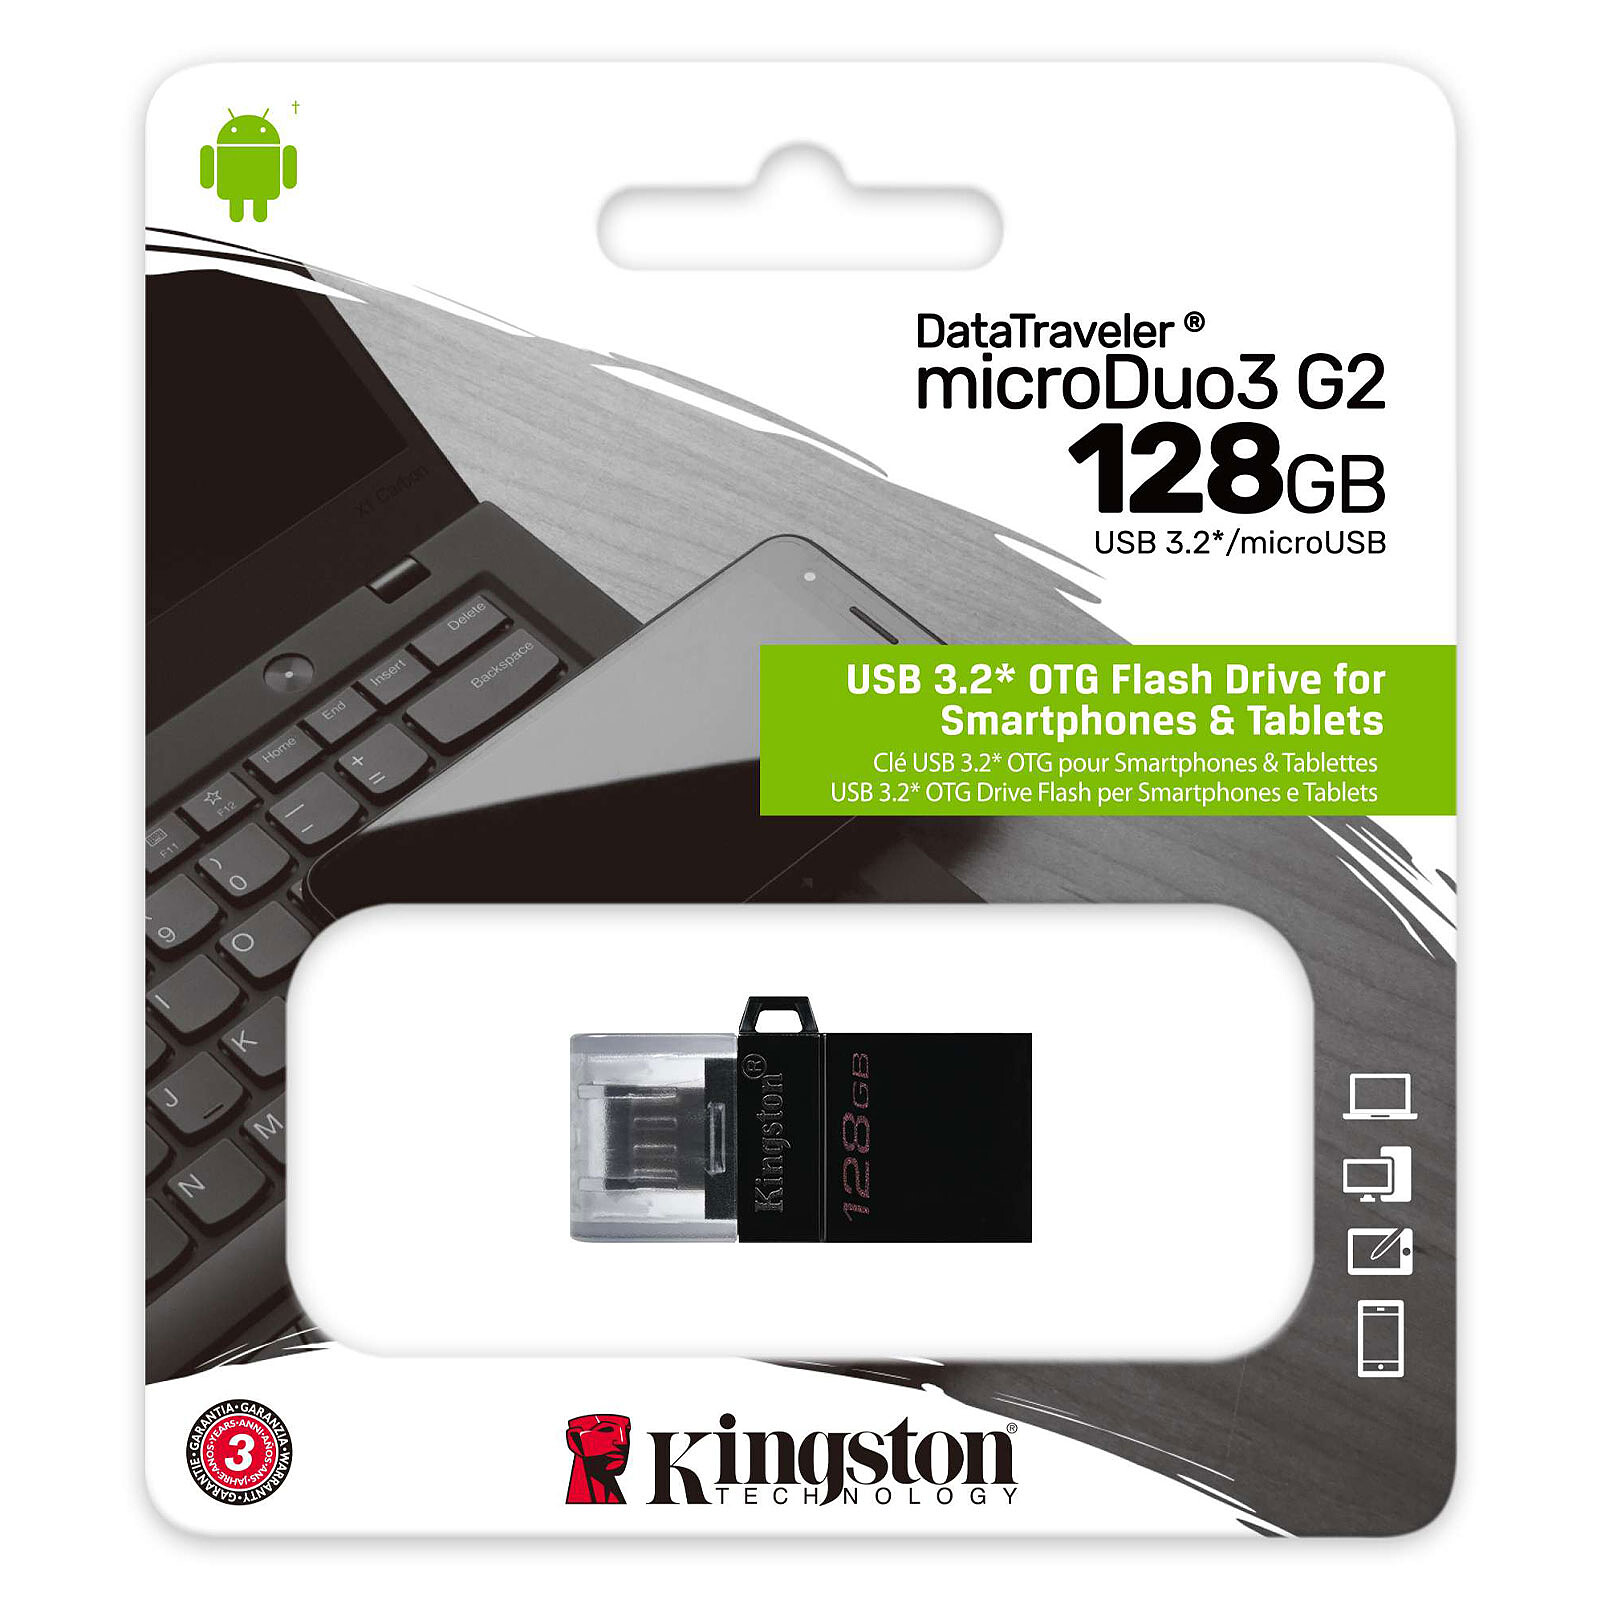 Kingston DataTraveler 80 256 Go - Clé USB - LDLC